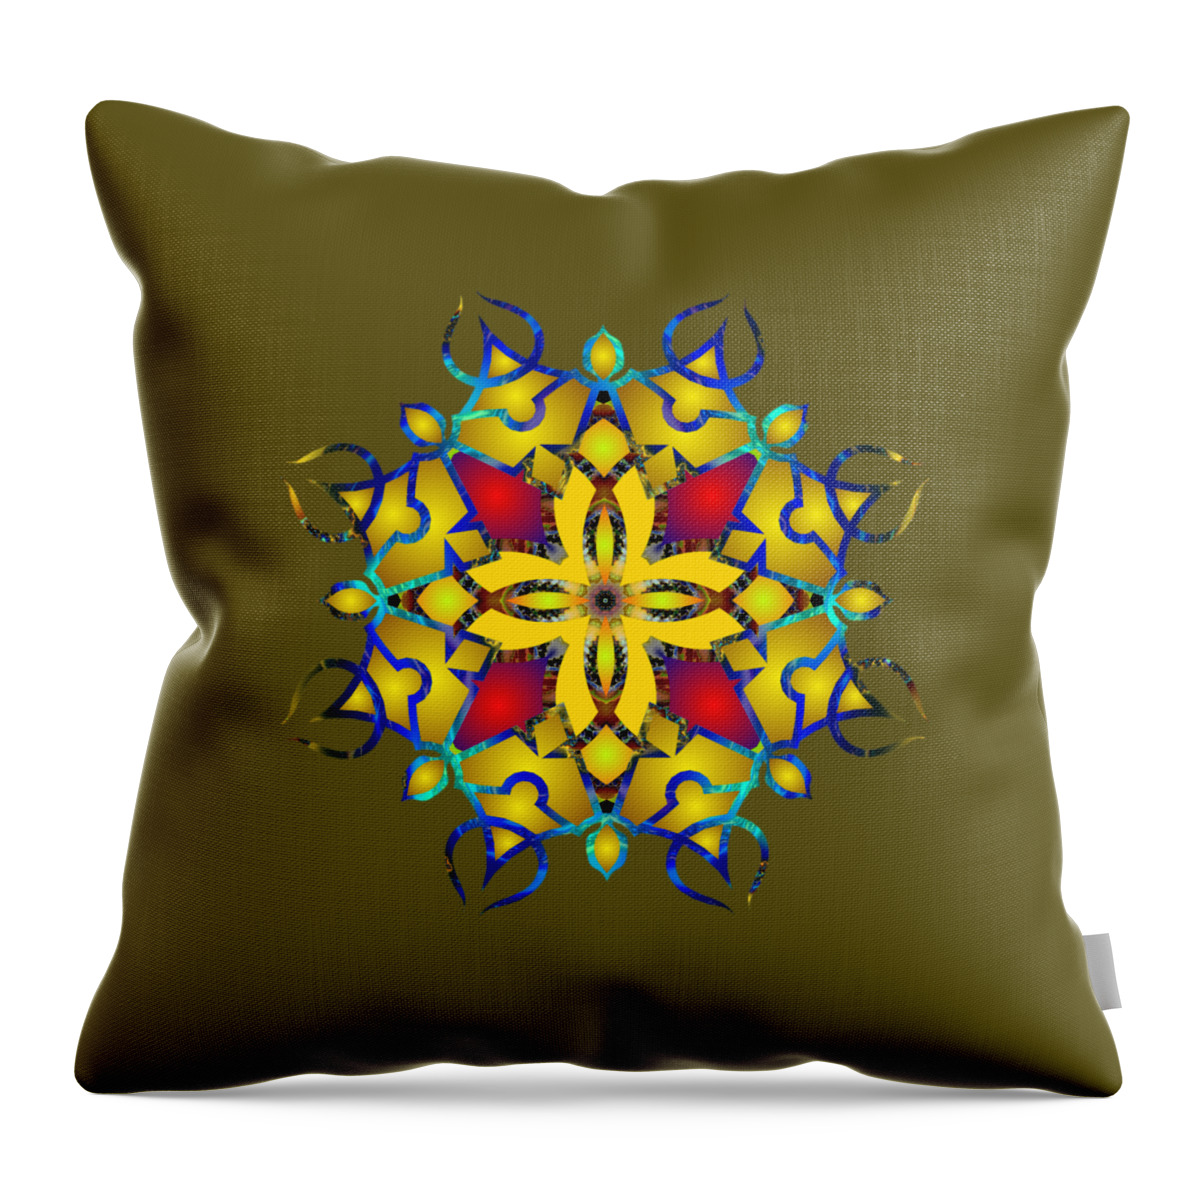 Mandala Throw Pillow featuring the digital art Psychedelic Mandala 011 B by Larry Capra